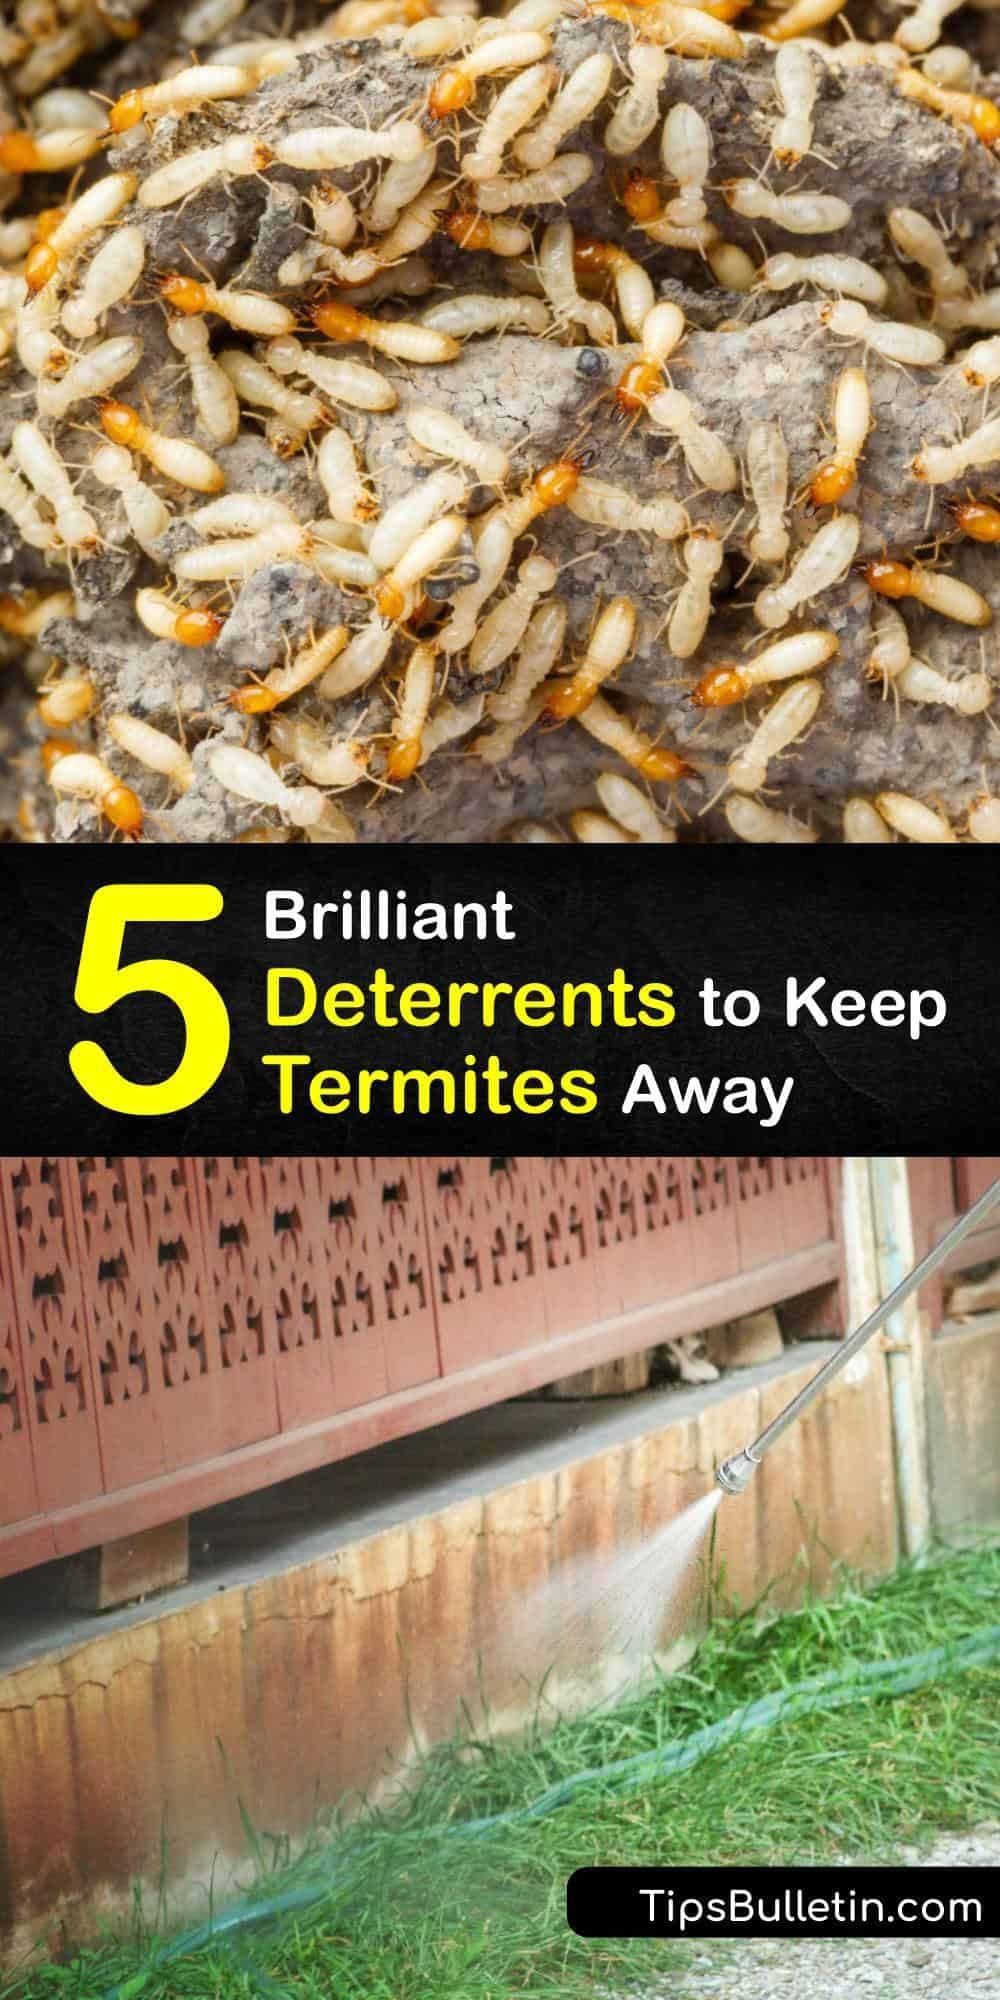 5 Brilliant Deterrents to Keep Termites Away